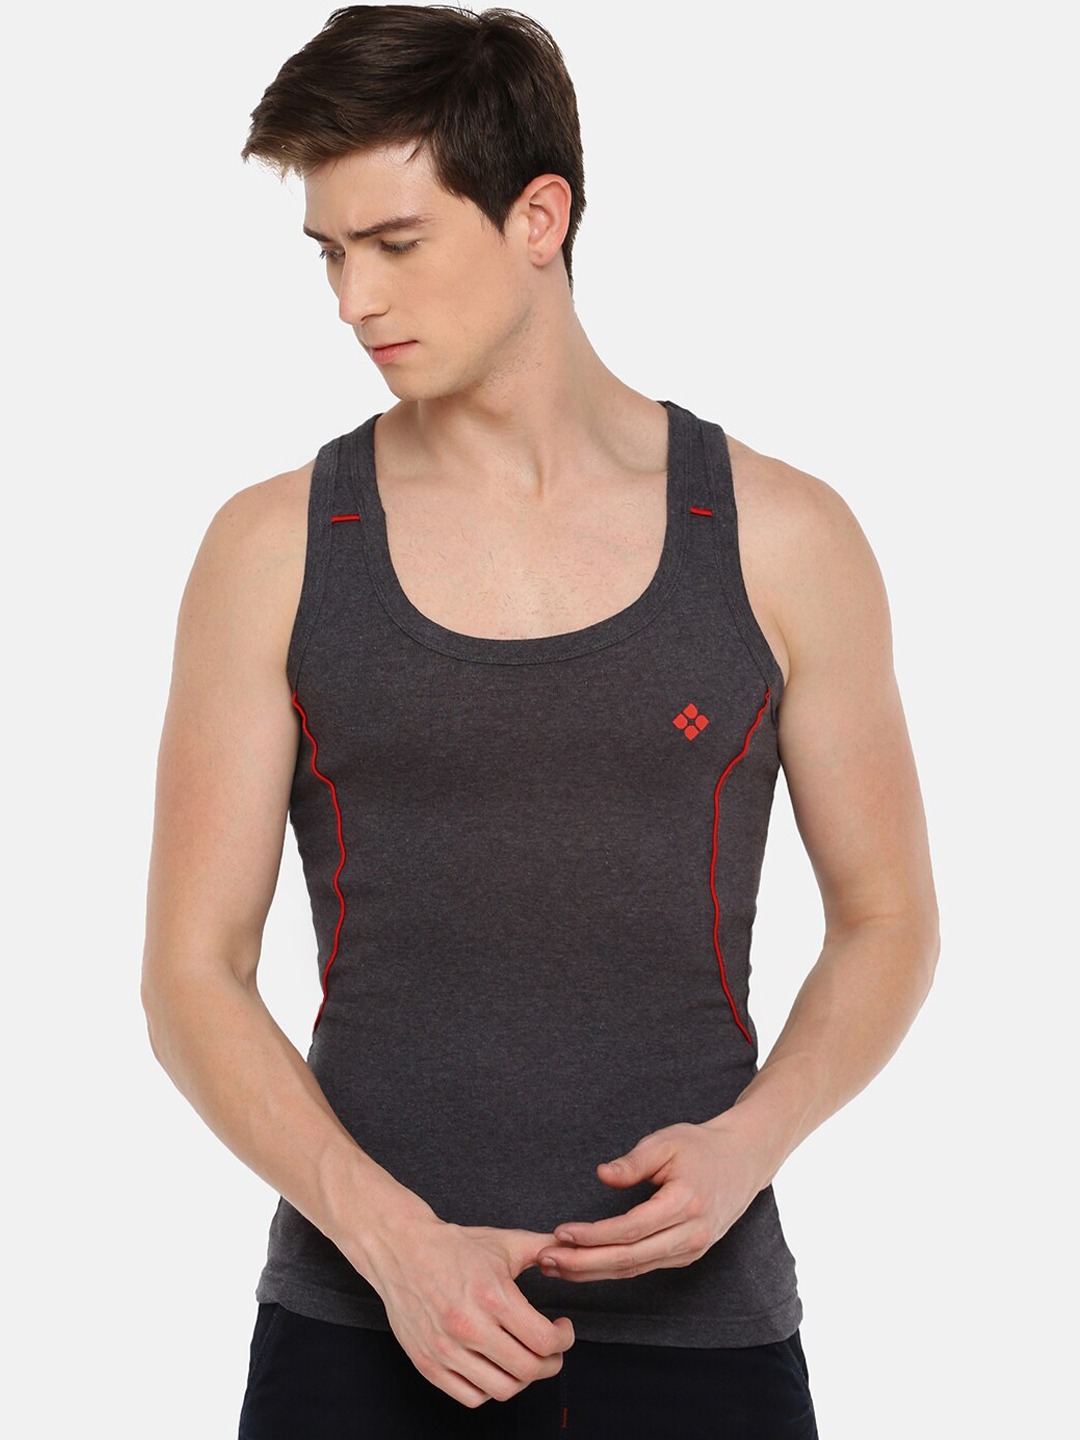 Clothing Innerwear Vests | Dollar Bigboss Men Pack Of 3 Assorted Cotton Gym Vests - XI84679